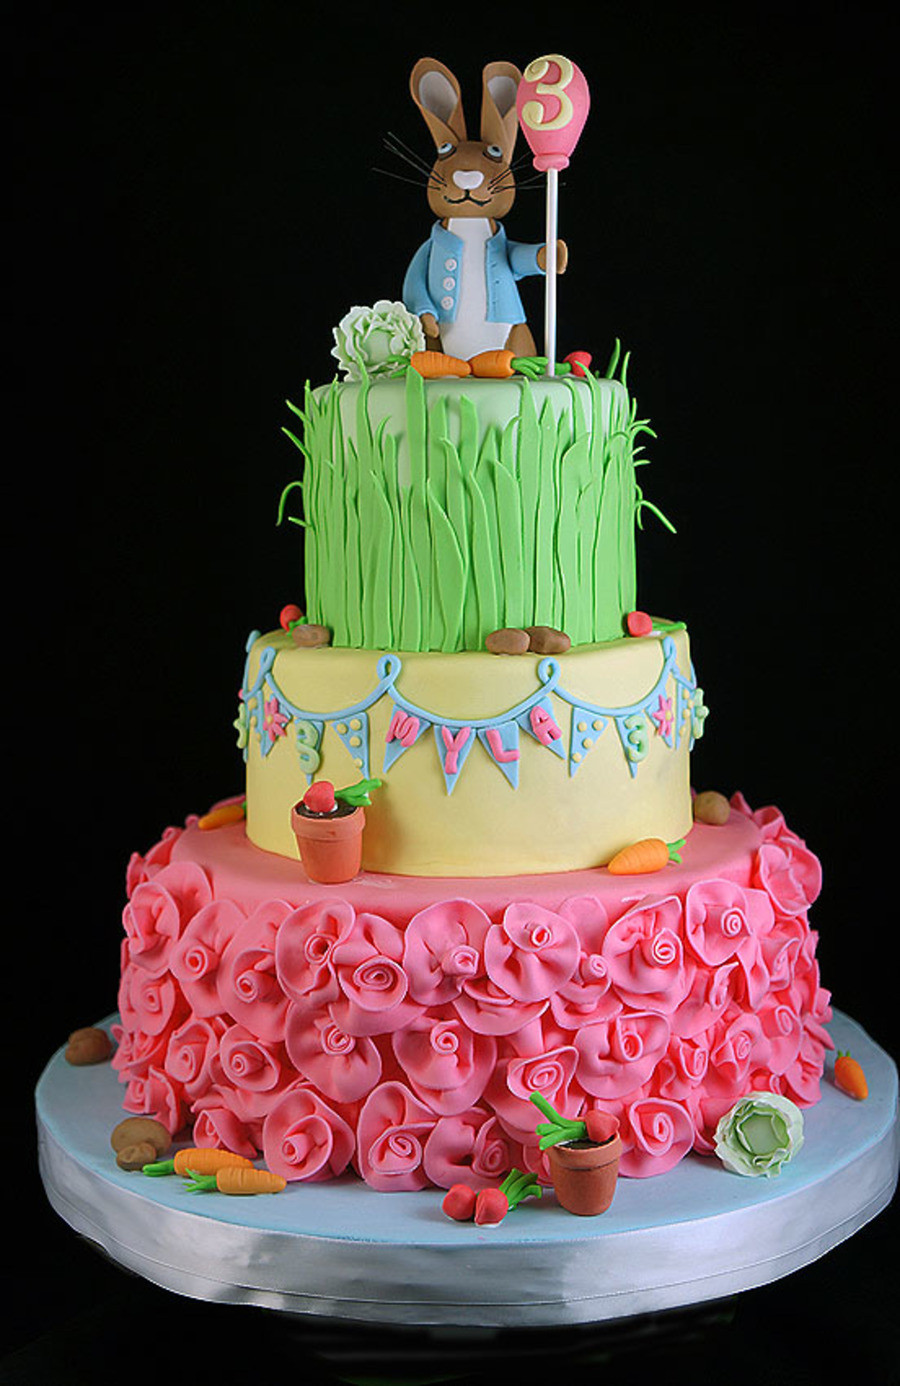 Easter Birthday Cakes
 Peter Rabbit Themed Cake For An Easter Birthday 5 8 11